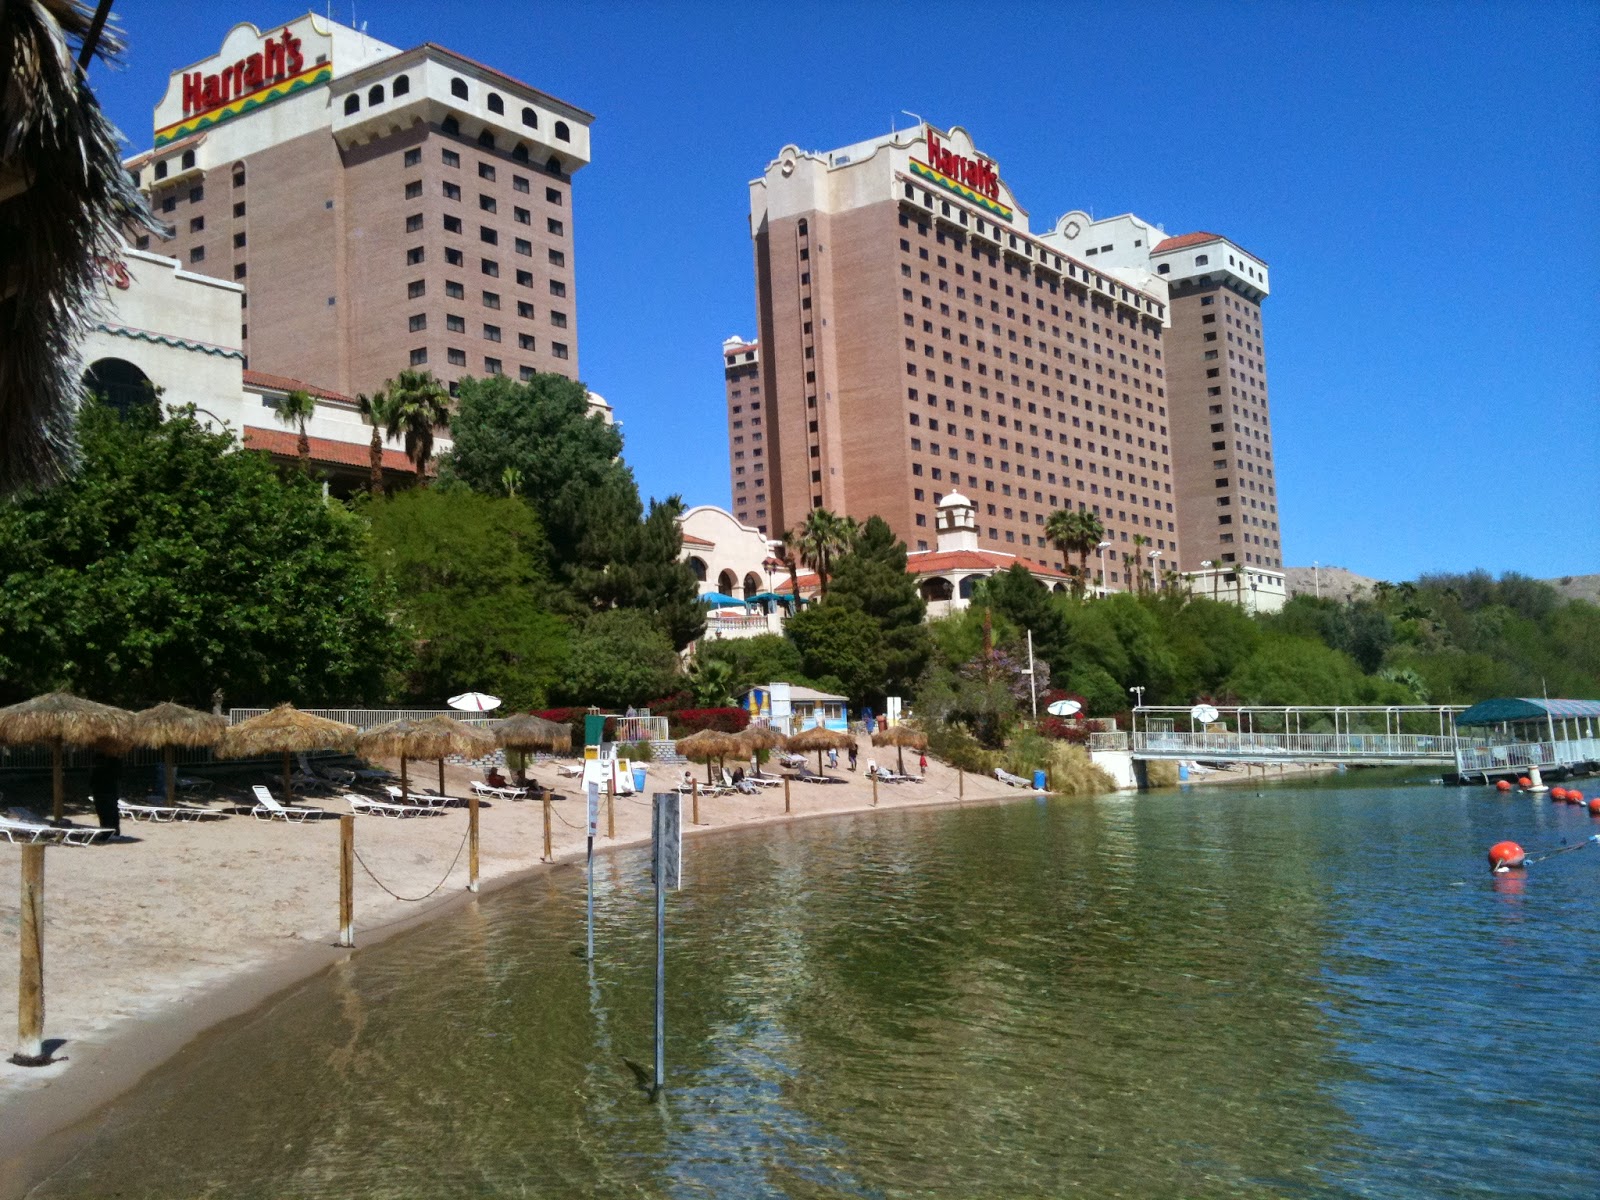 HarrahS Laughlin Hotel & Casino